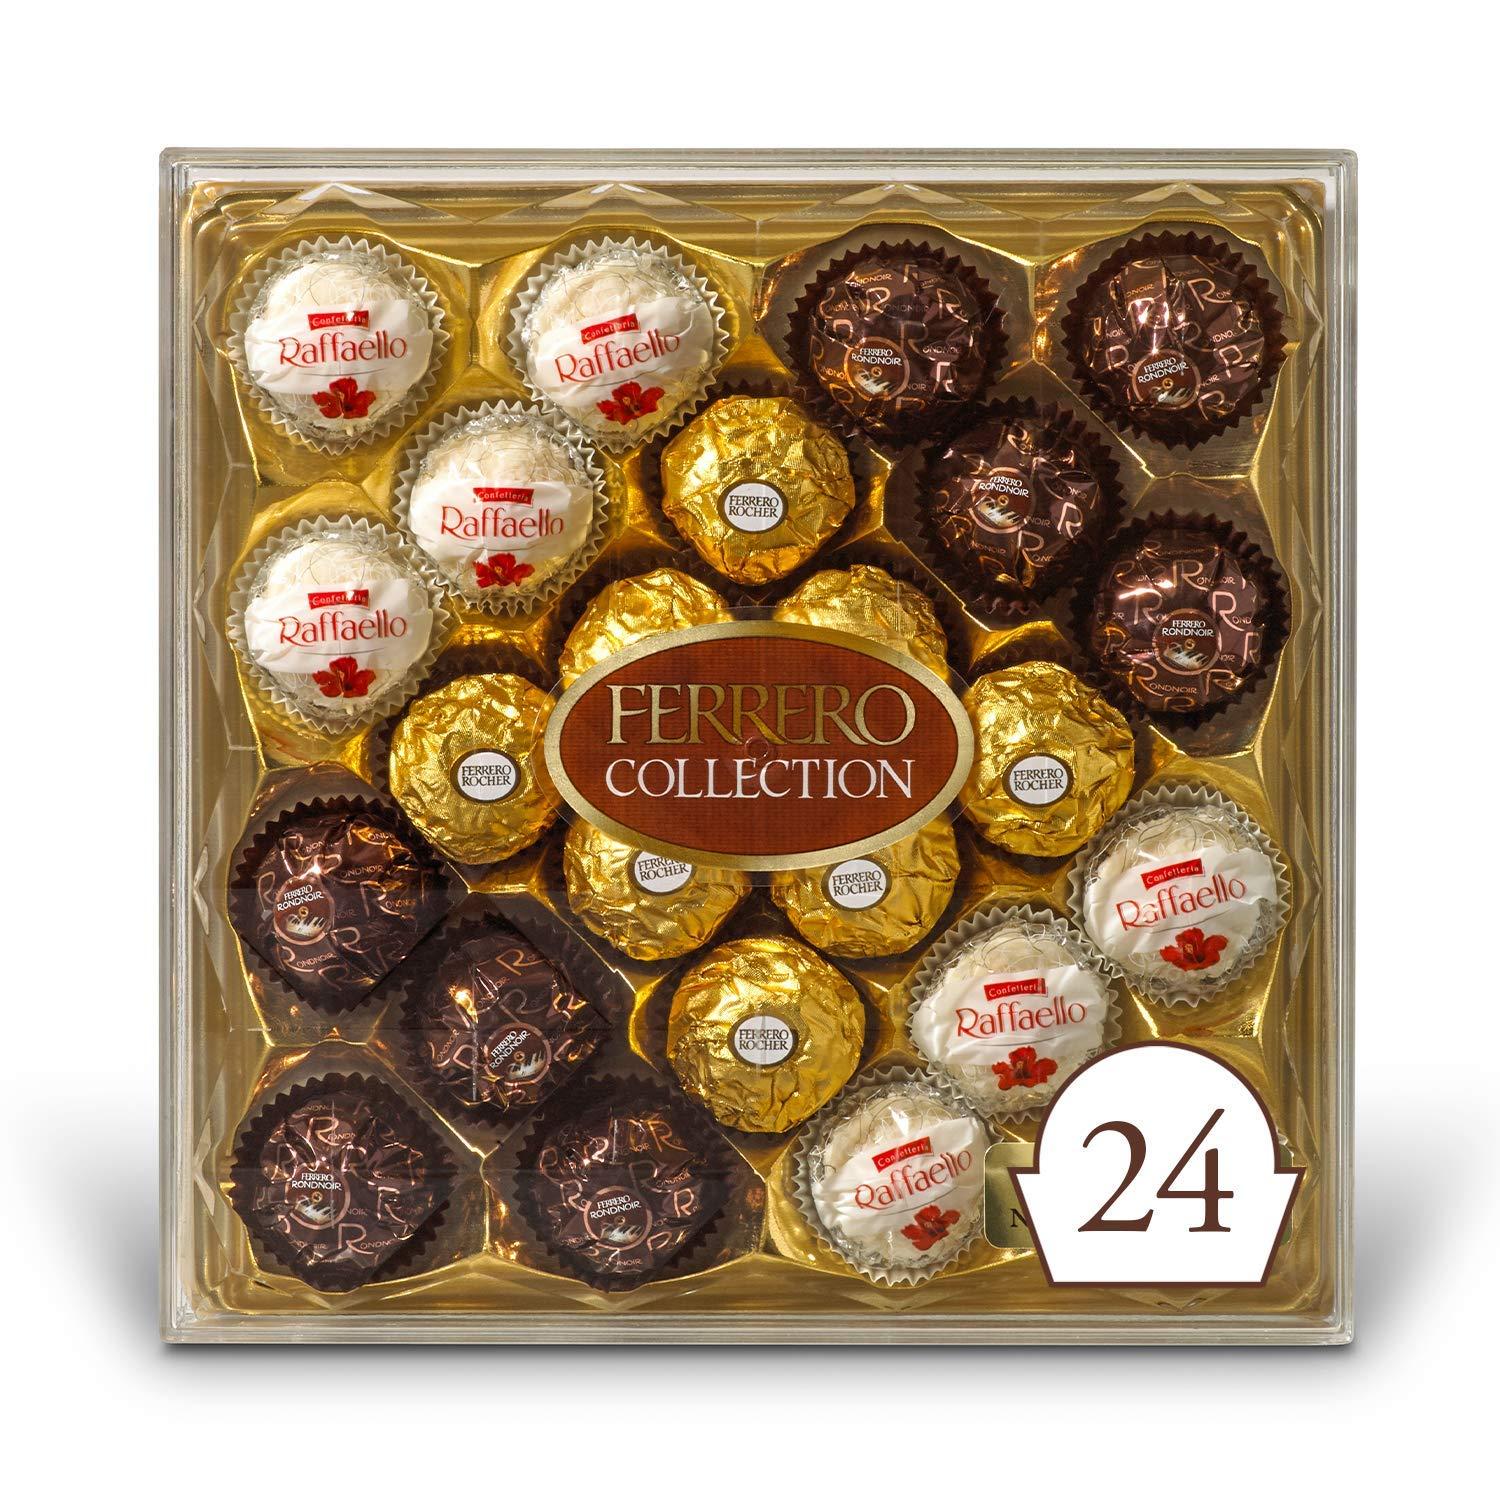 24 Ferrero Rocher Collection for $8.92